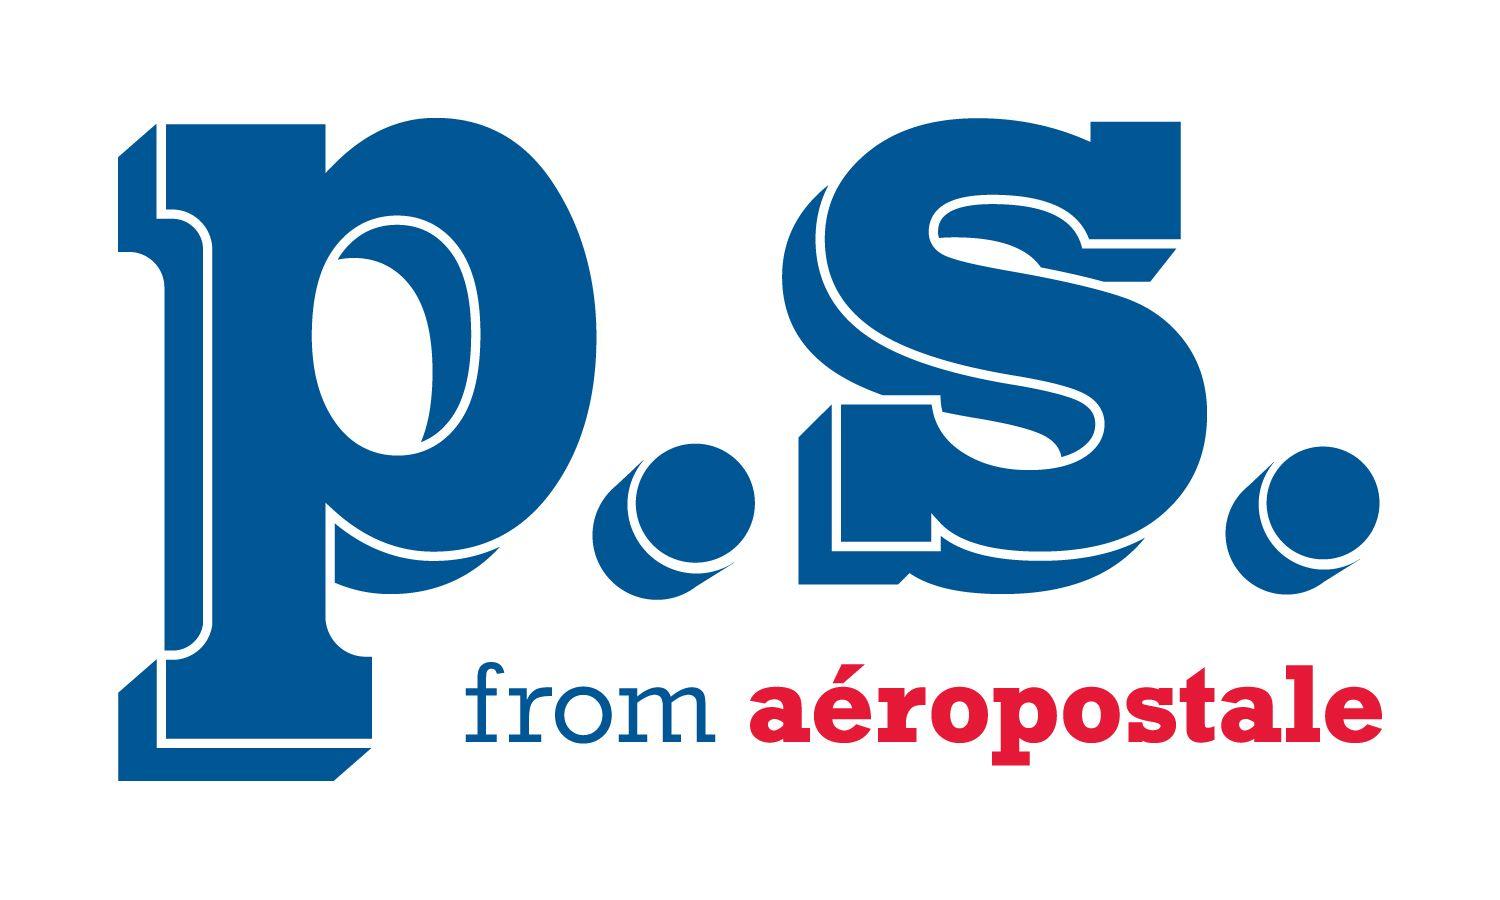 Aeropostale Logo - P.S. from Aeropostale